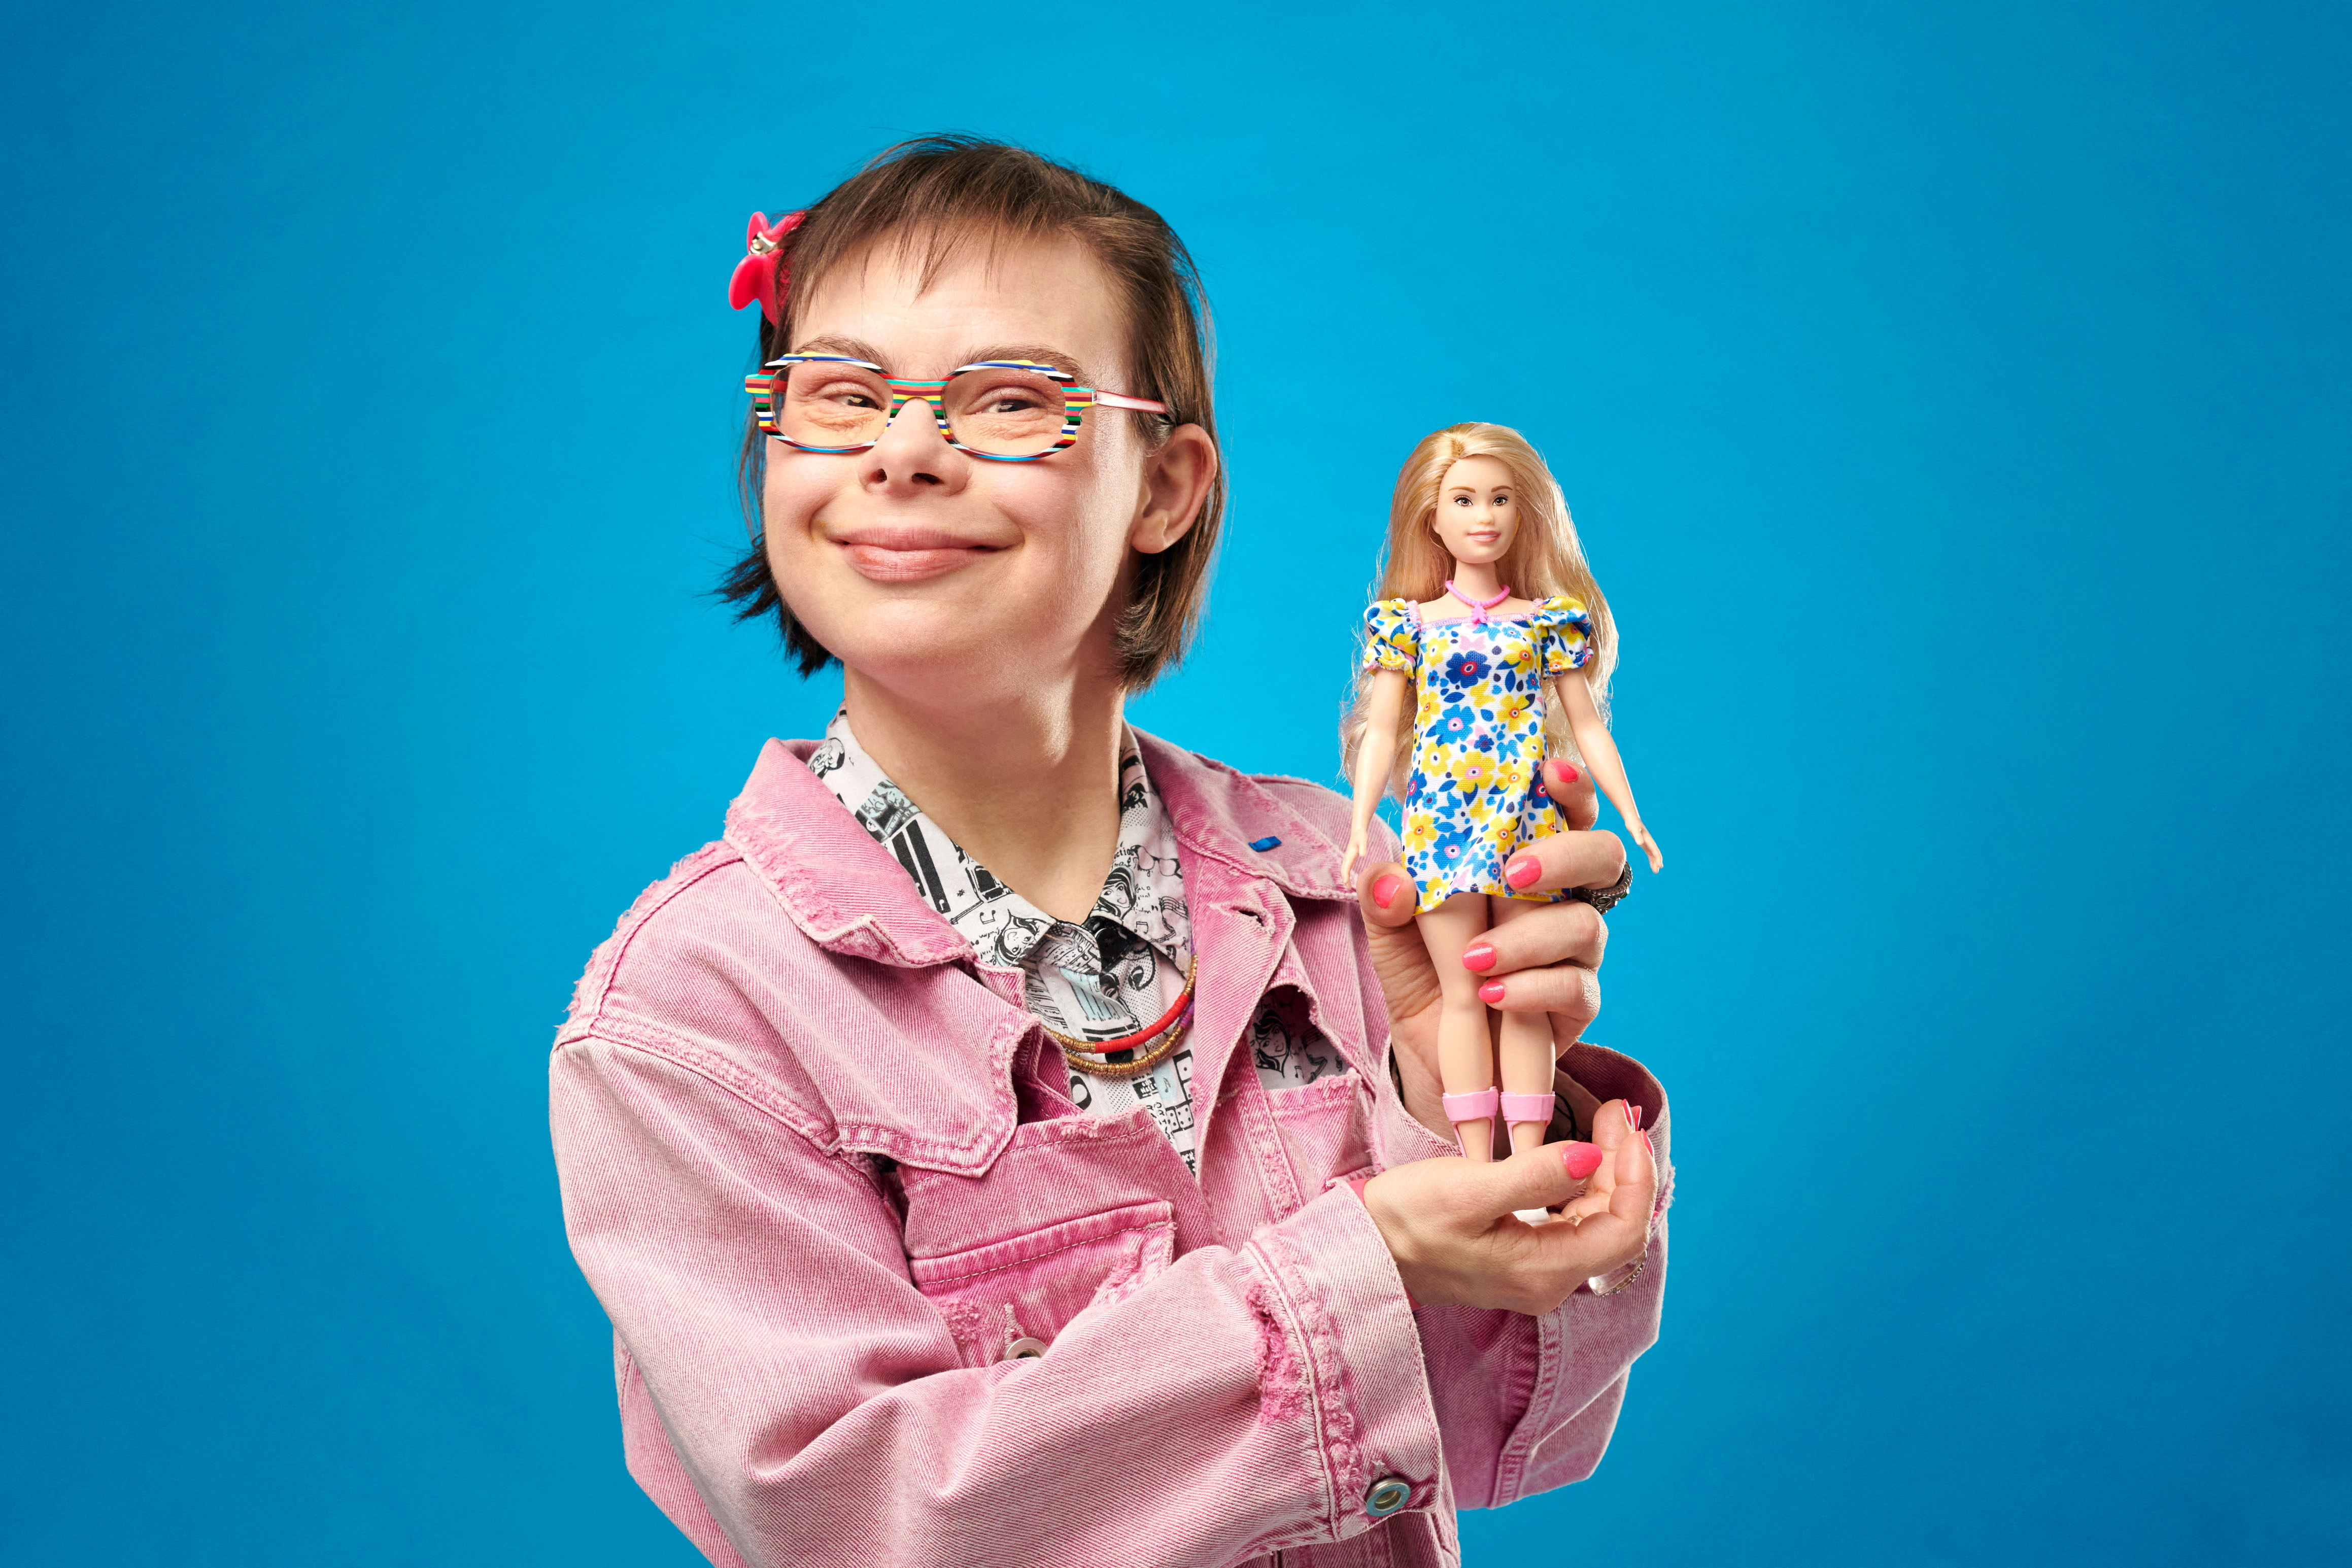 Barbie Toys  Mattel Brasil